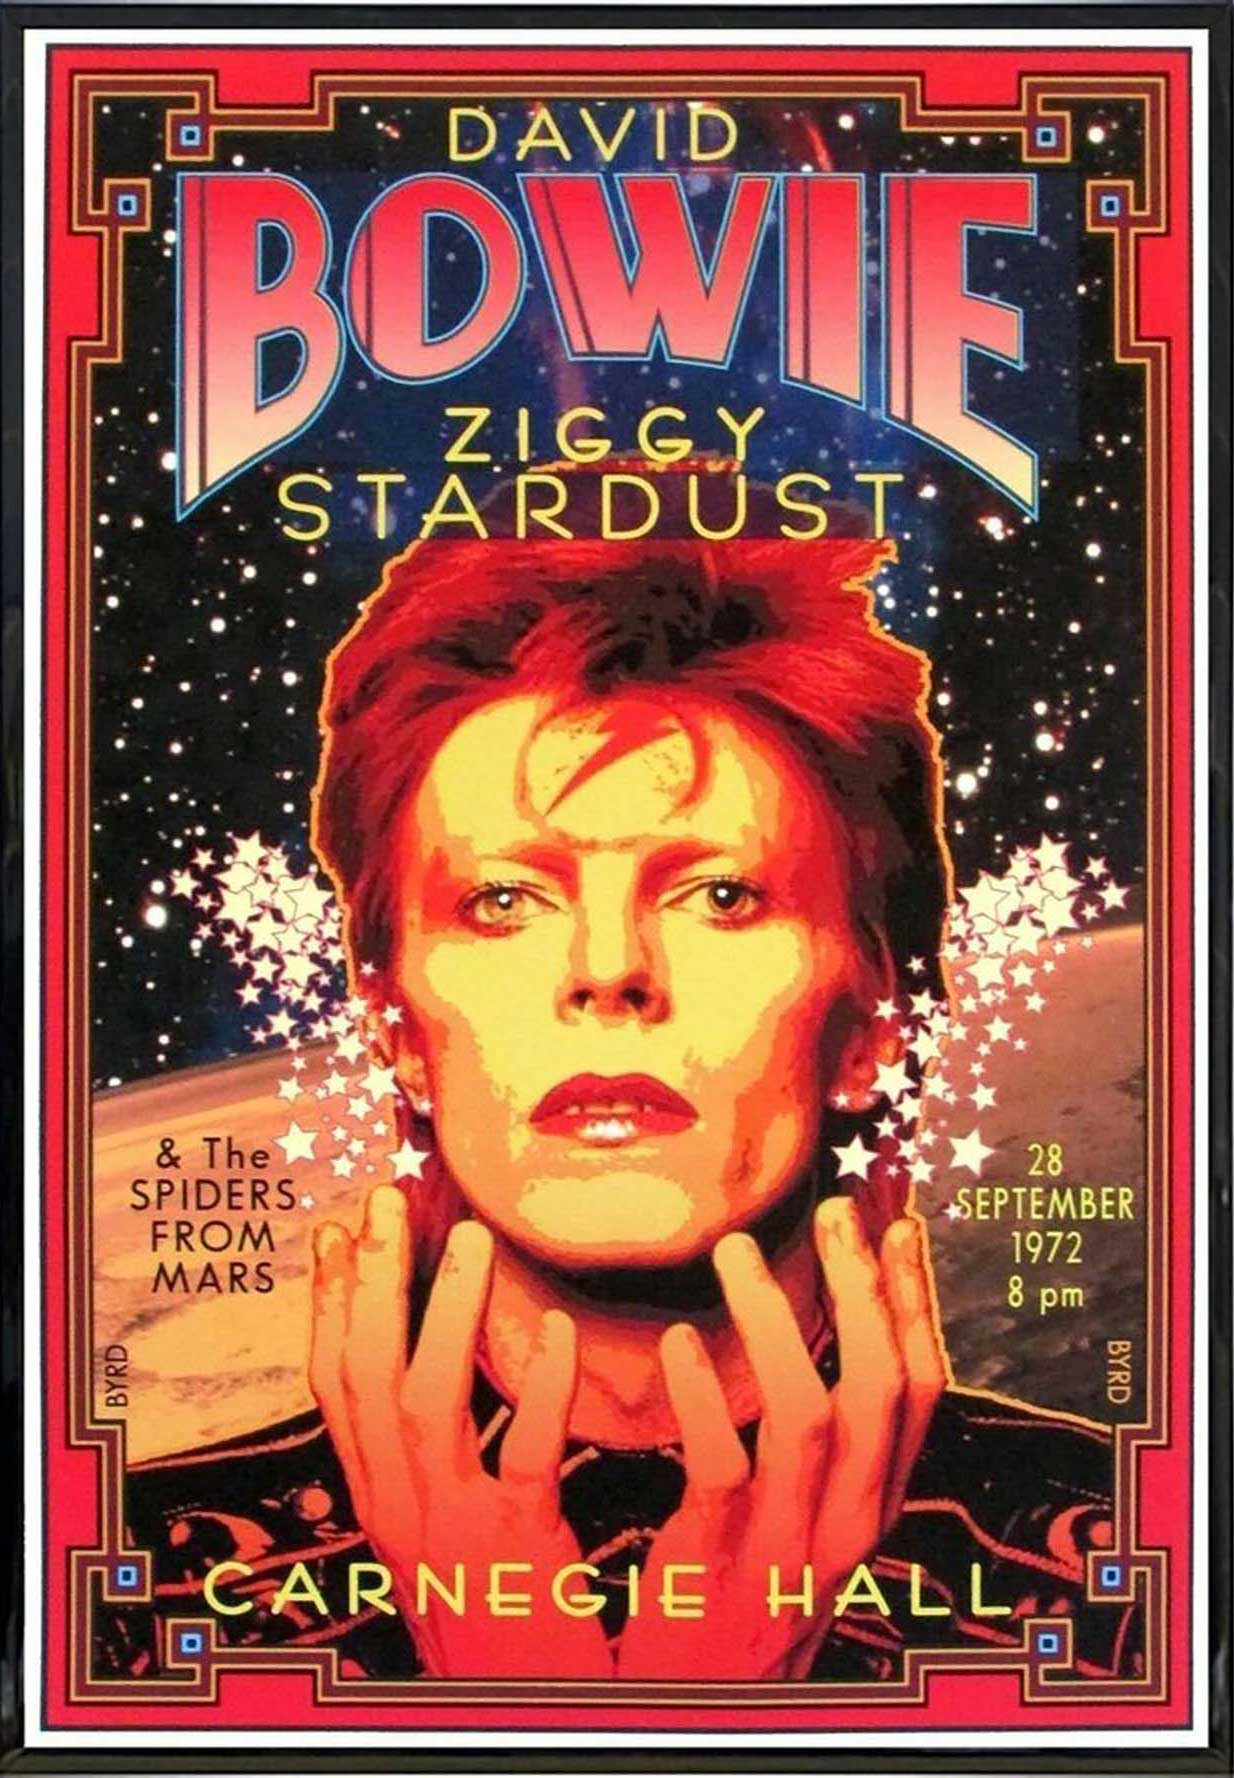 David Bowie concert posters